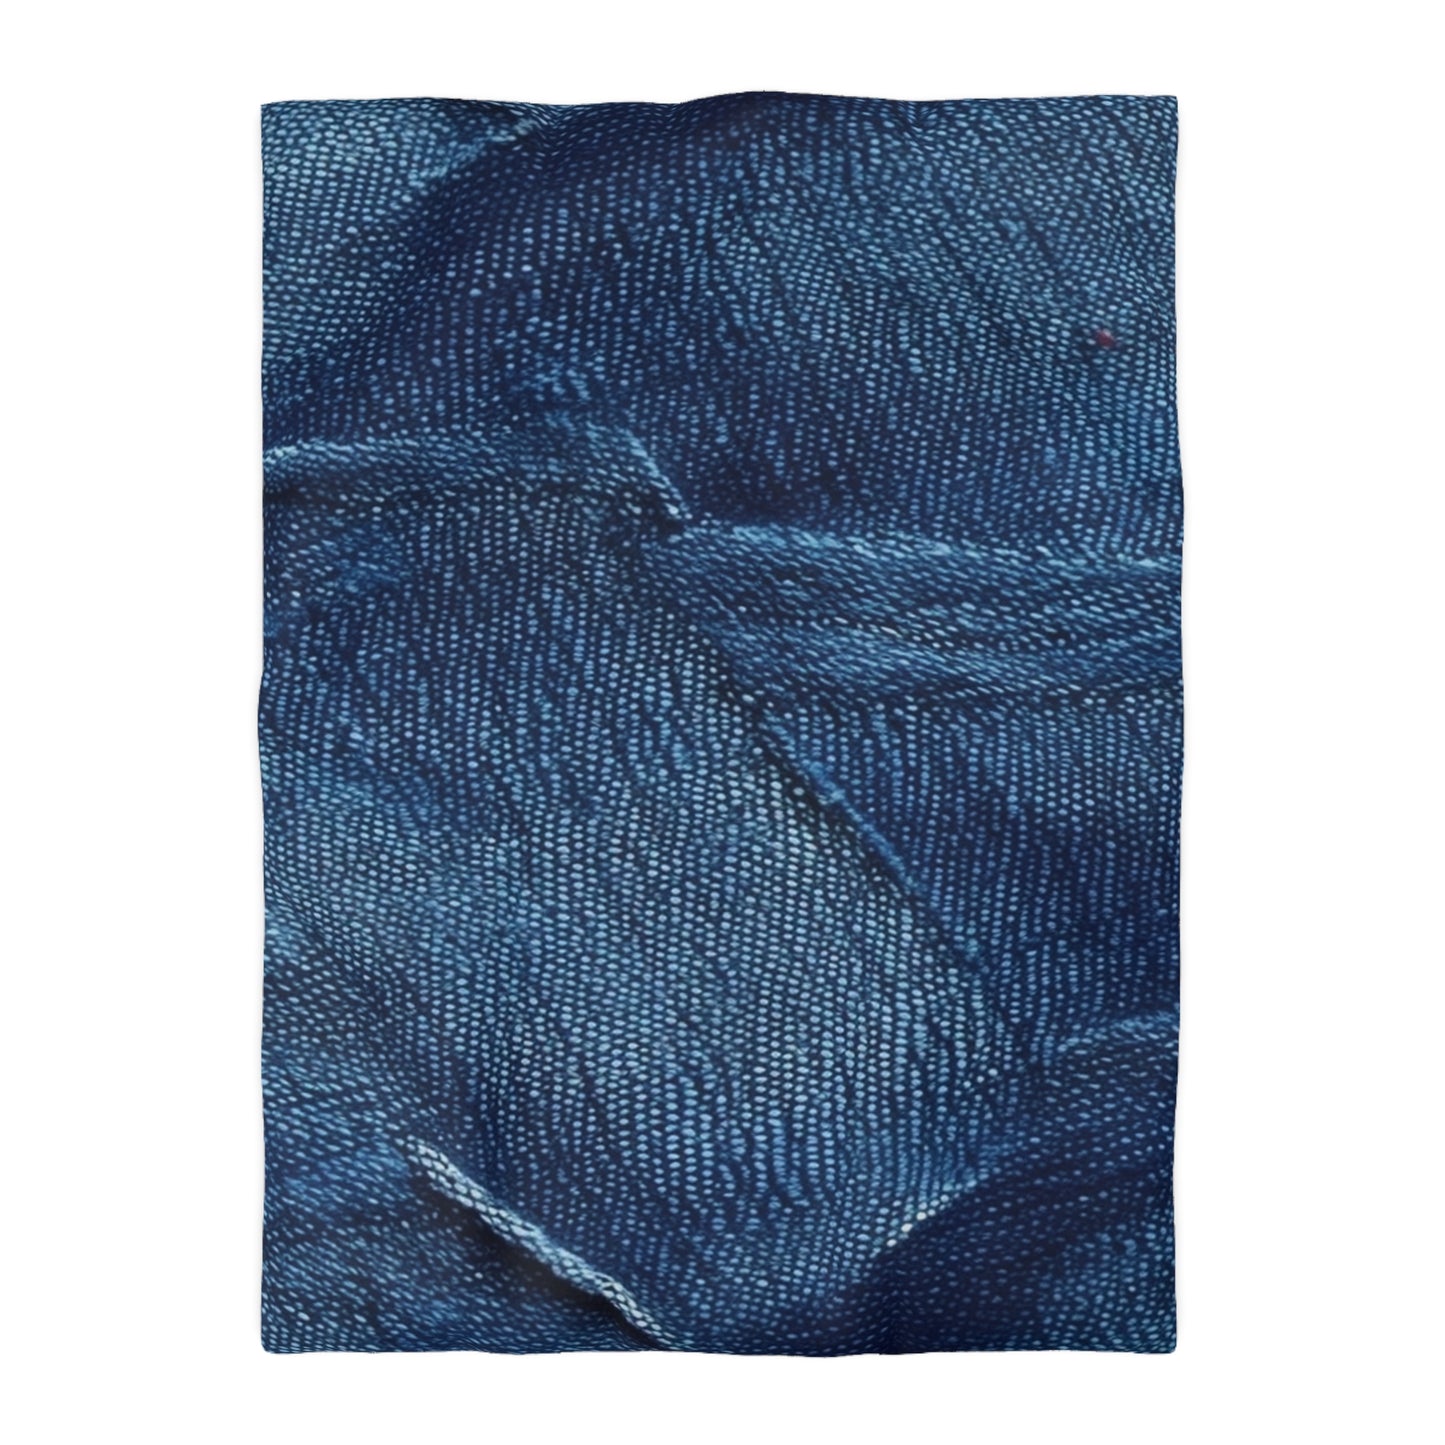 Dark Blue: Distressed Denim-Inspired Fabric Design - Microfiber Duvet Cover